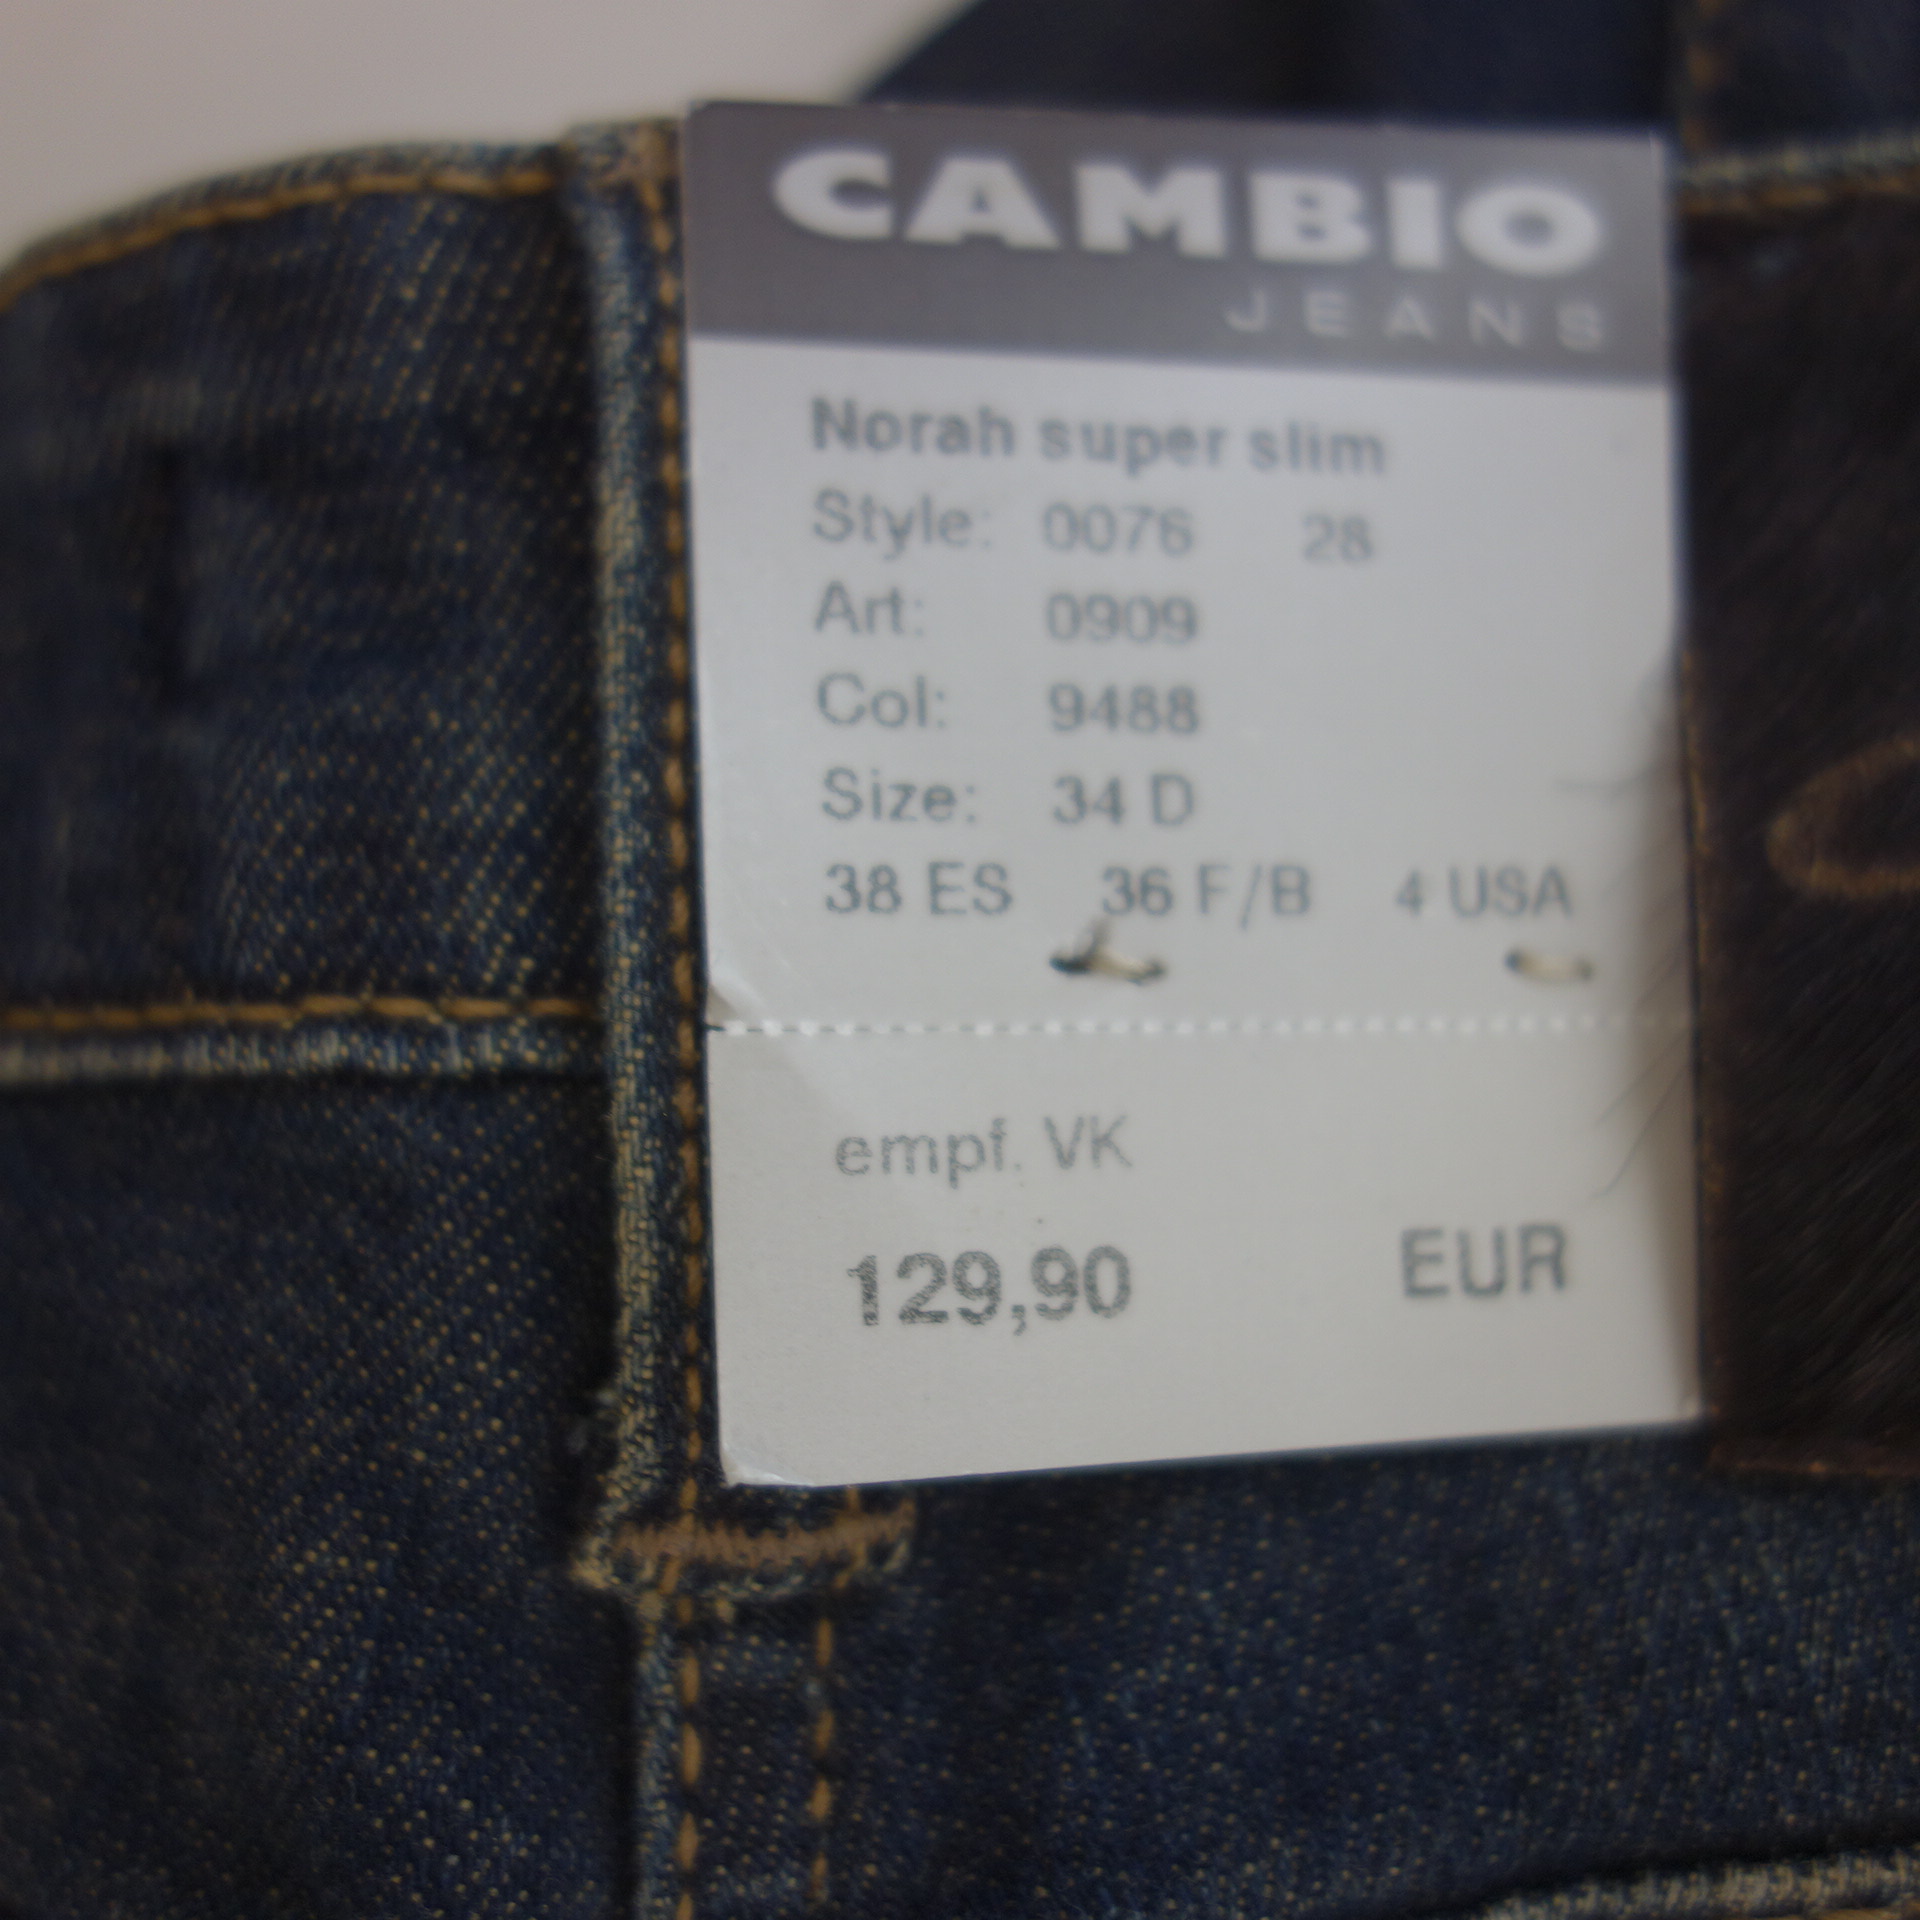 CAMBIO Damen Jeans Hose Jeanshose Blau Modell Norah Super Slim Gr 34